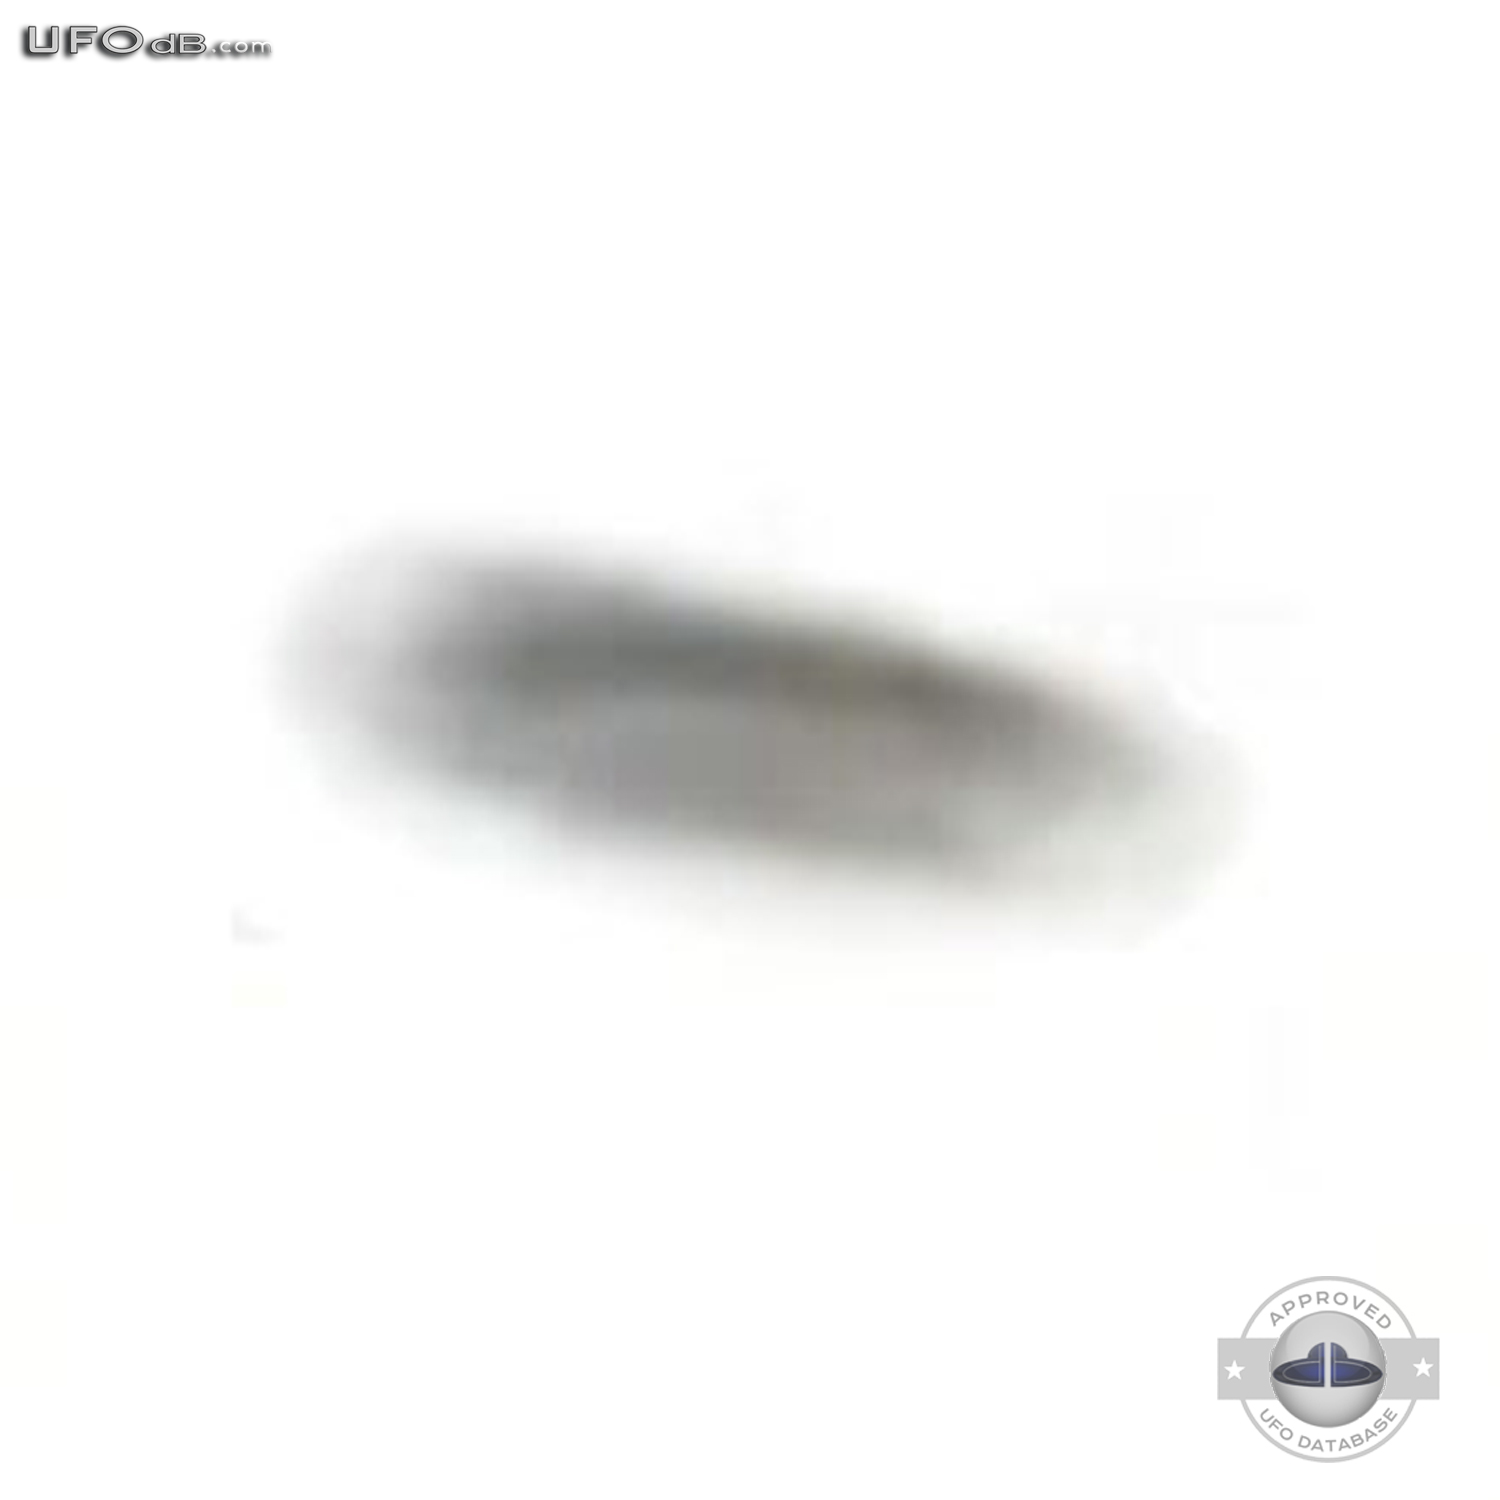 Camera test captures UFO in the sky in Mimon, Liberec, Czech Republic UFO Picture #371-5